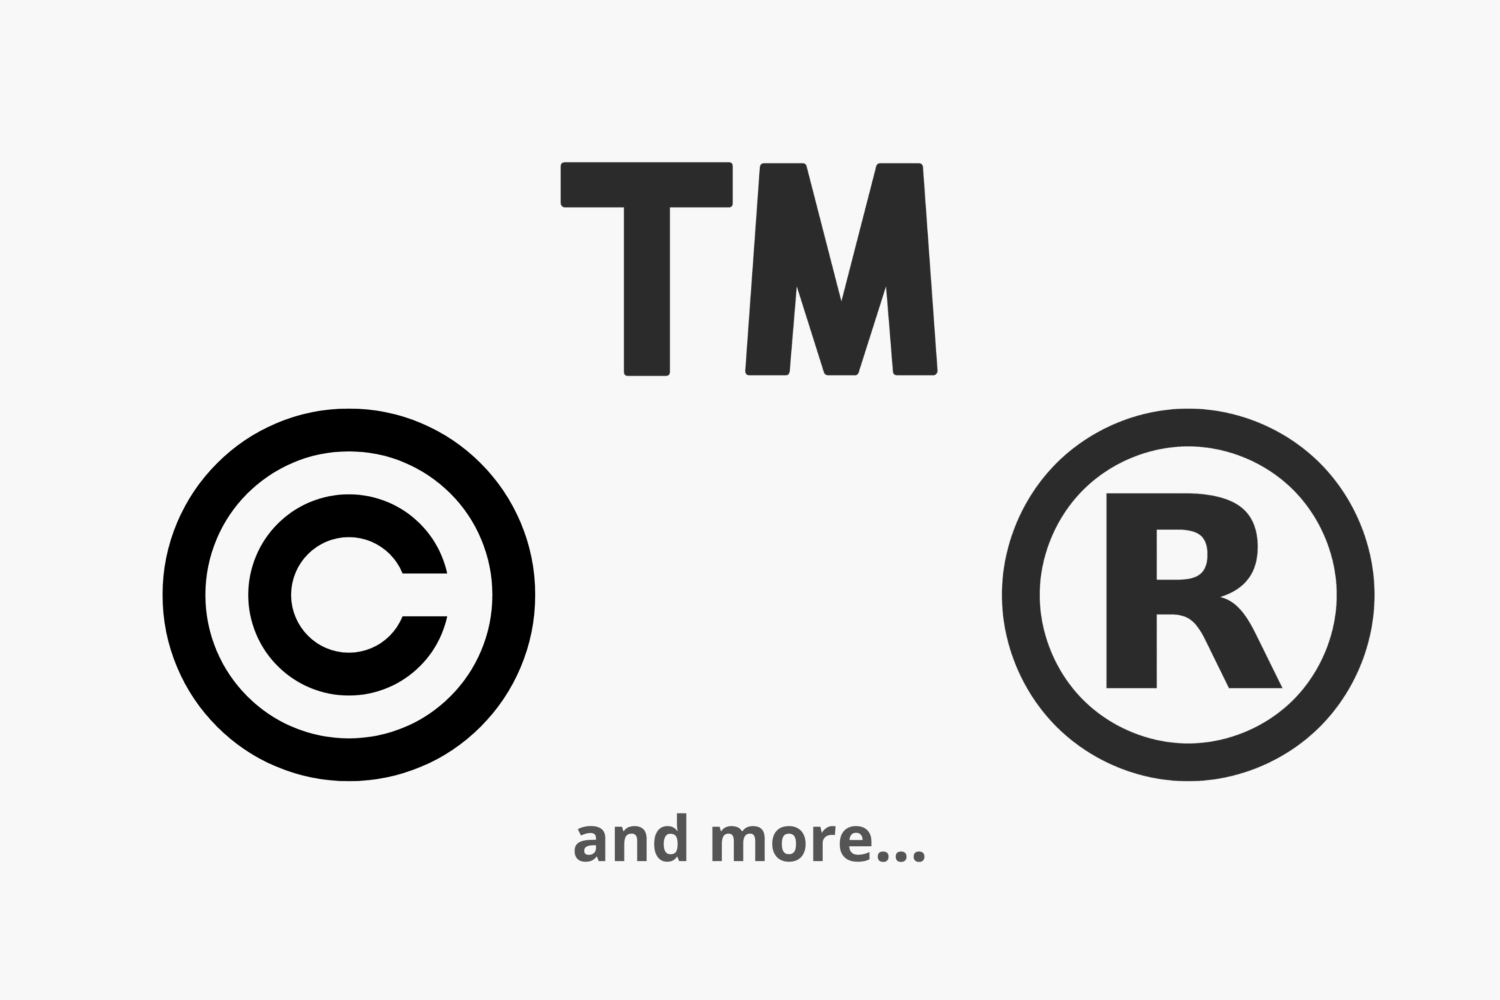 Copyright, trademark, and registered symbols on a light background